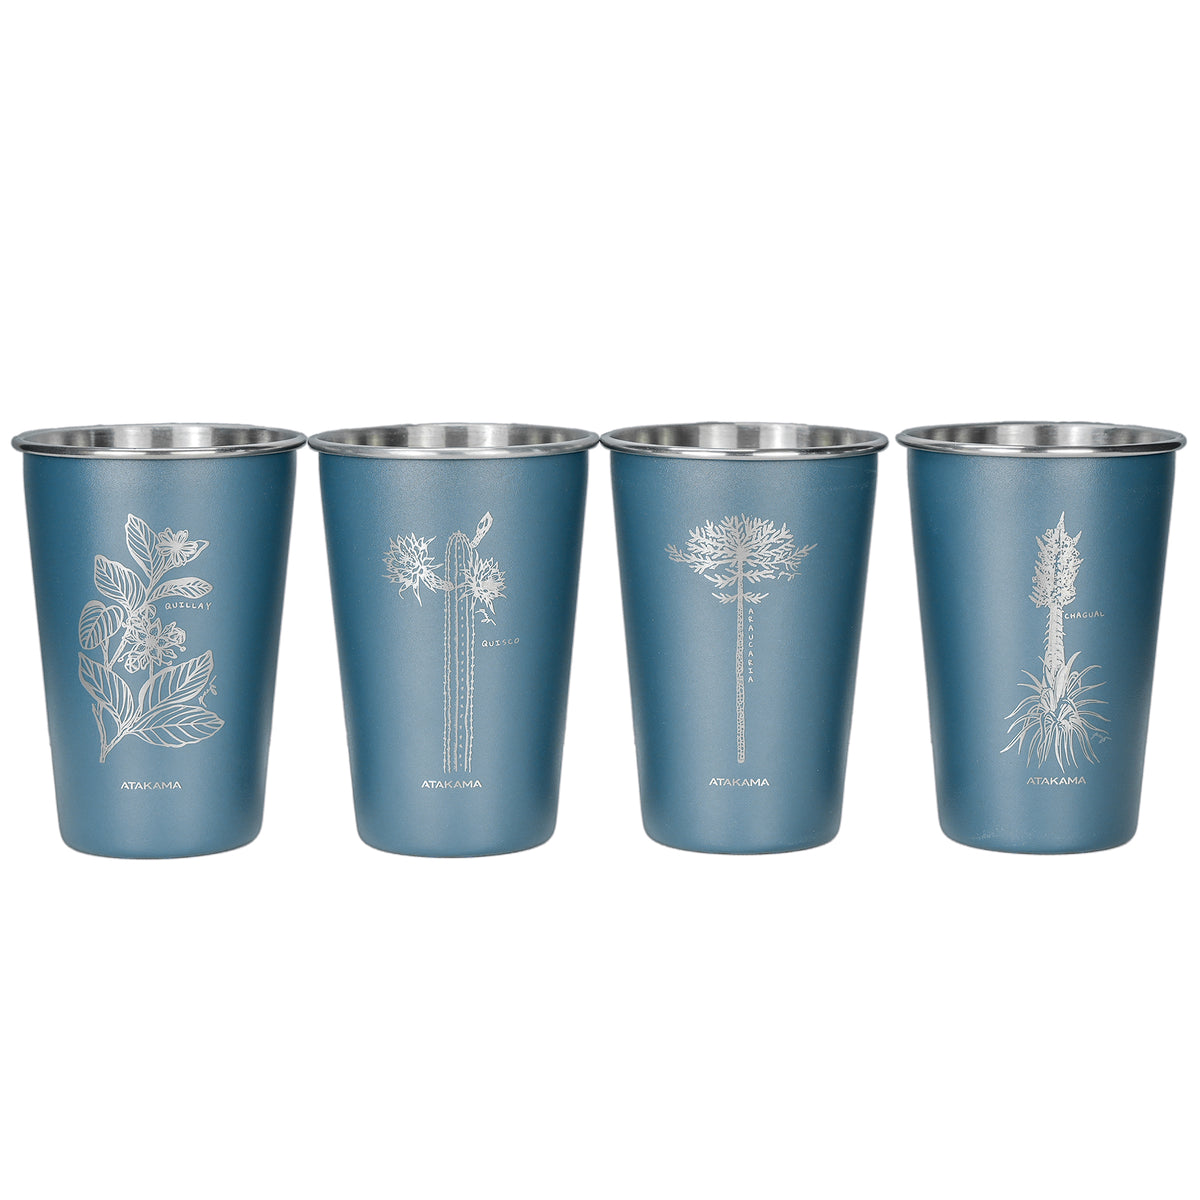 Set de cuatro vasos flora chilenas azul Aluminio 480 mililitros Atakama Outdoor Quillay Quisco Araucaria Chagual